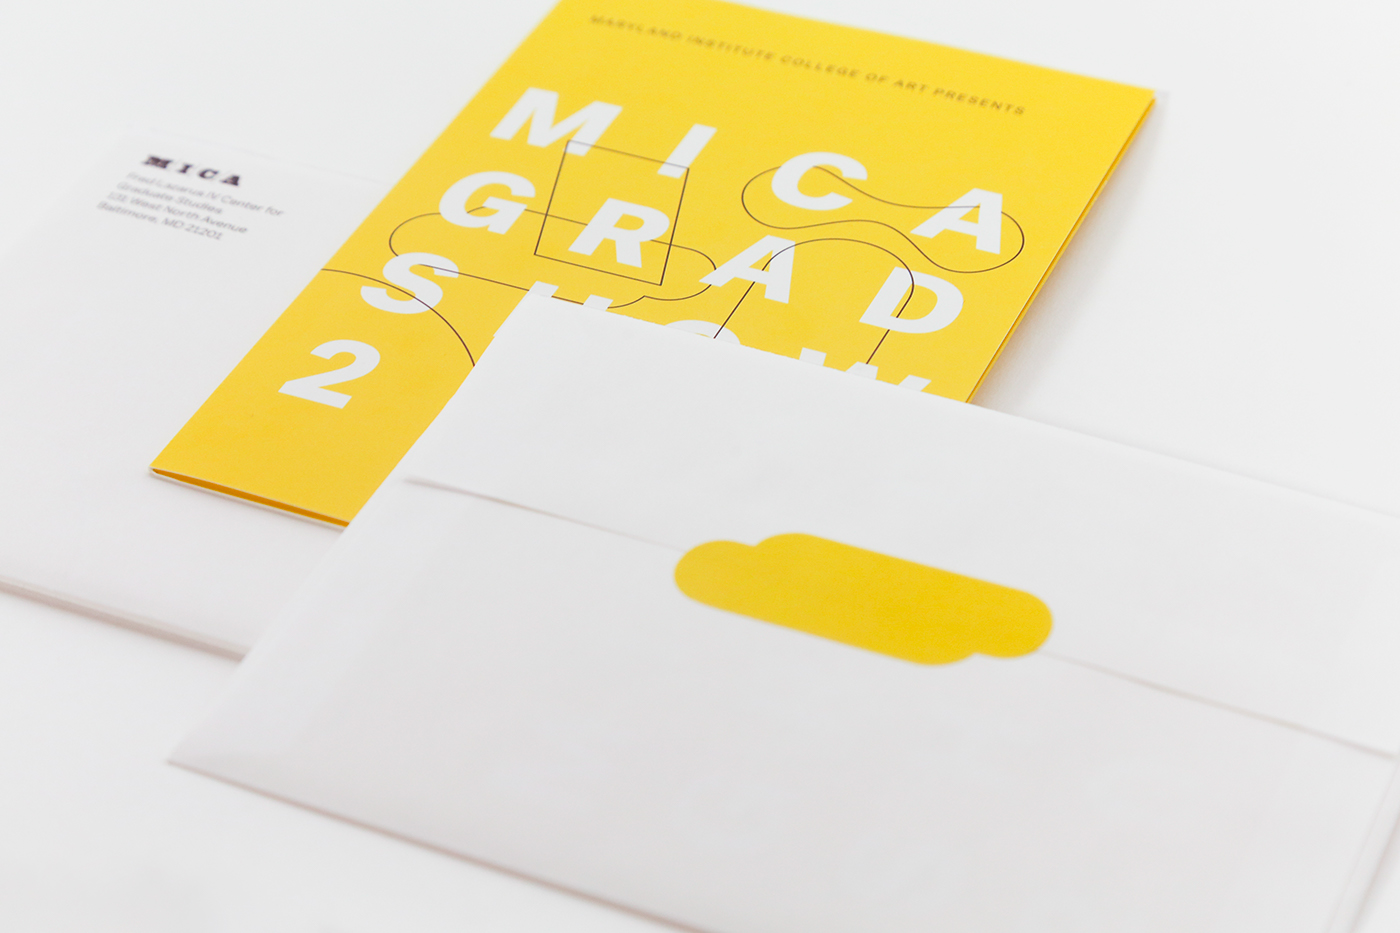 branding  graphic design  yellow identity logo MICA MICA grad show Web Design  print design  adobeawards